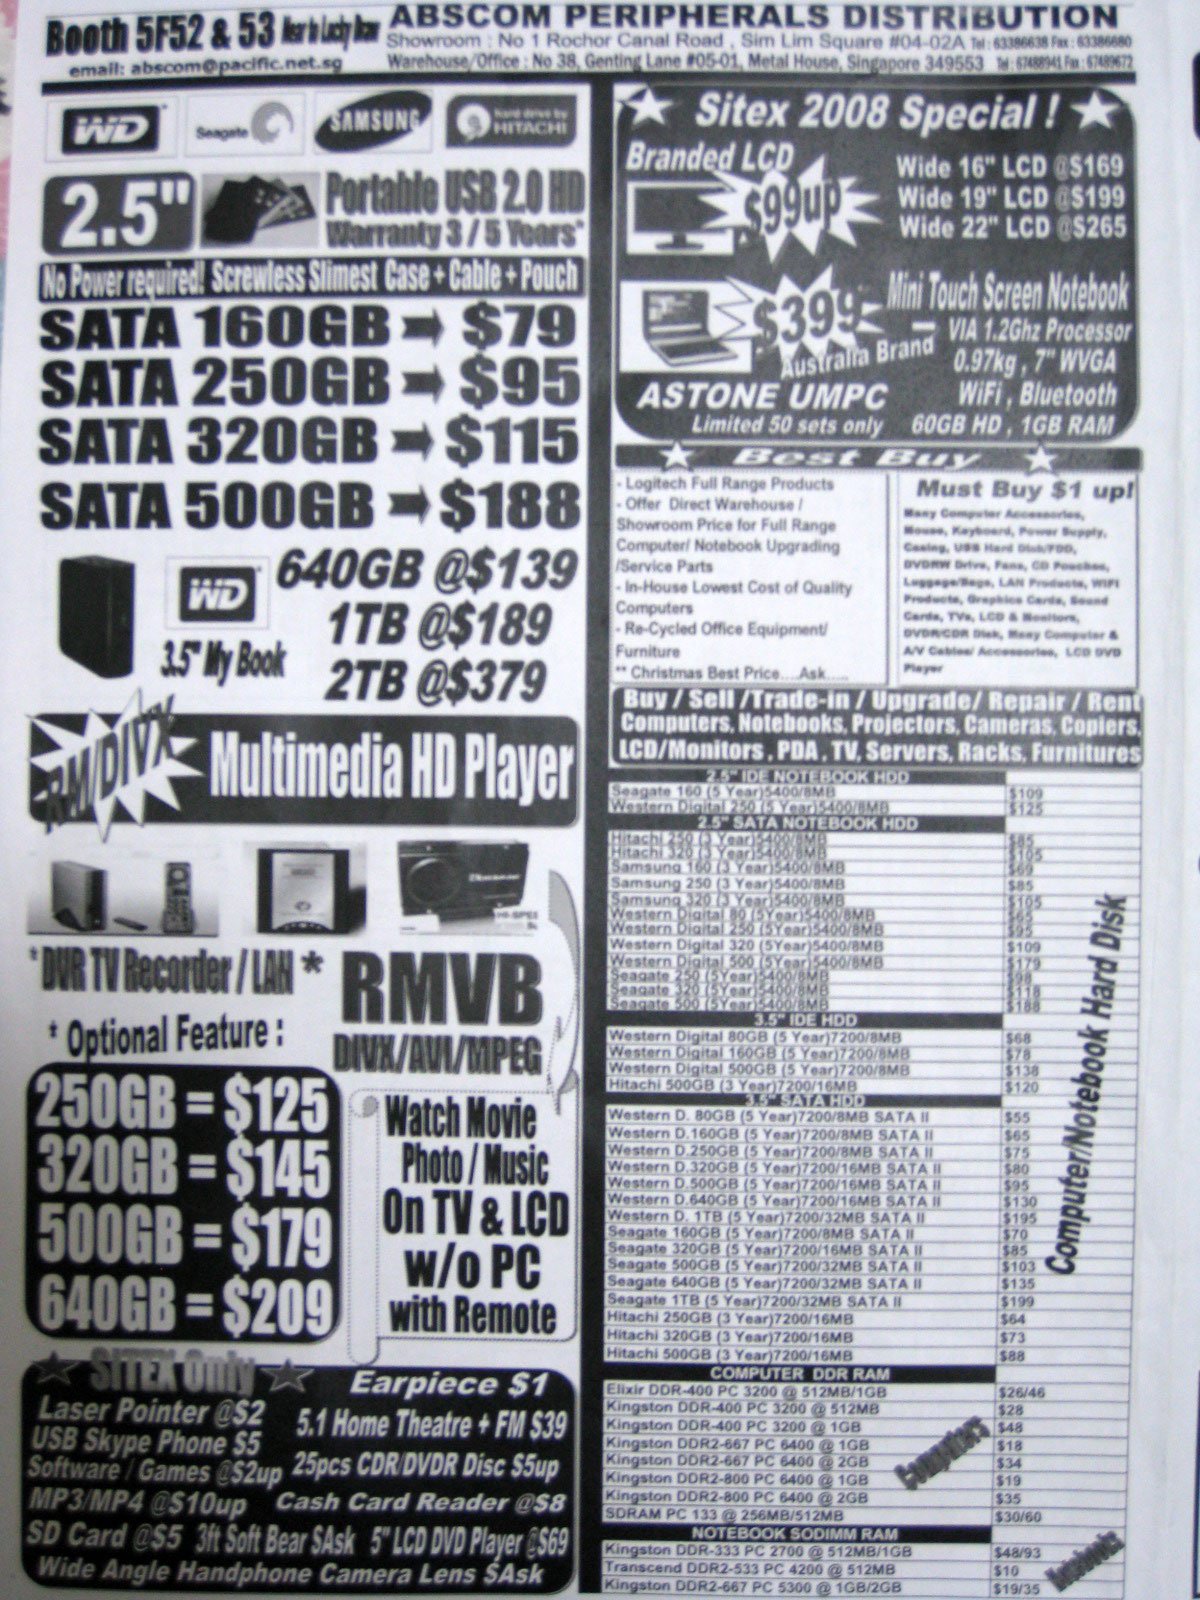 Sitex 2008 price list image brochure of Abscom